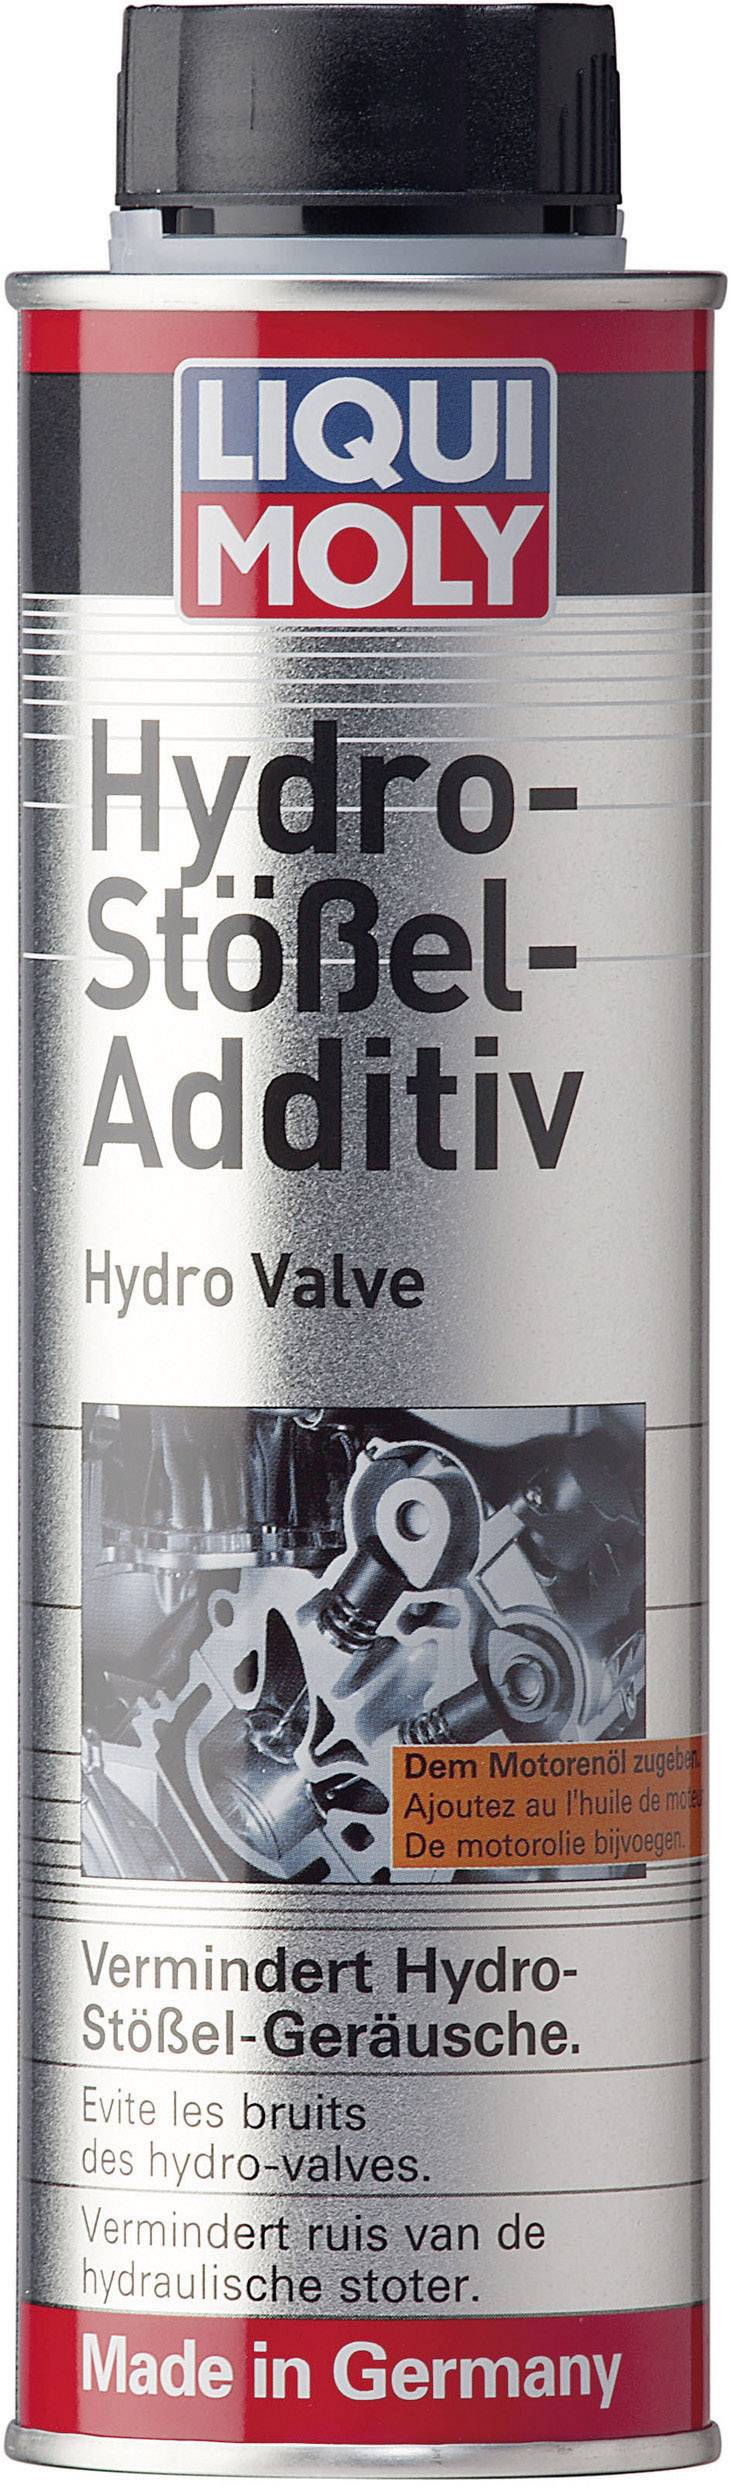 Buy Liqui Moly Hydro-Sto chisel-additive 1009 300 ml